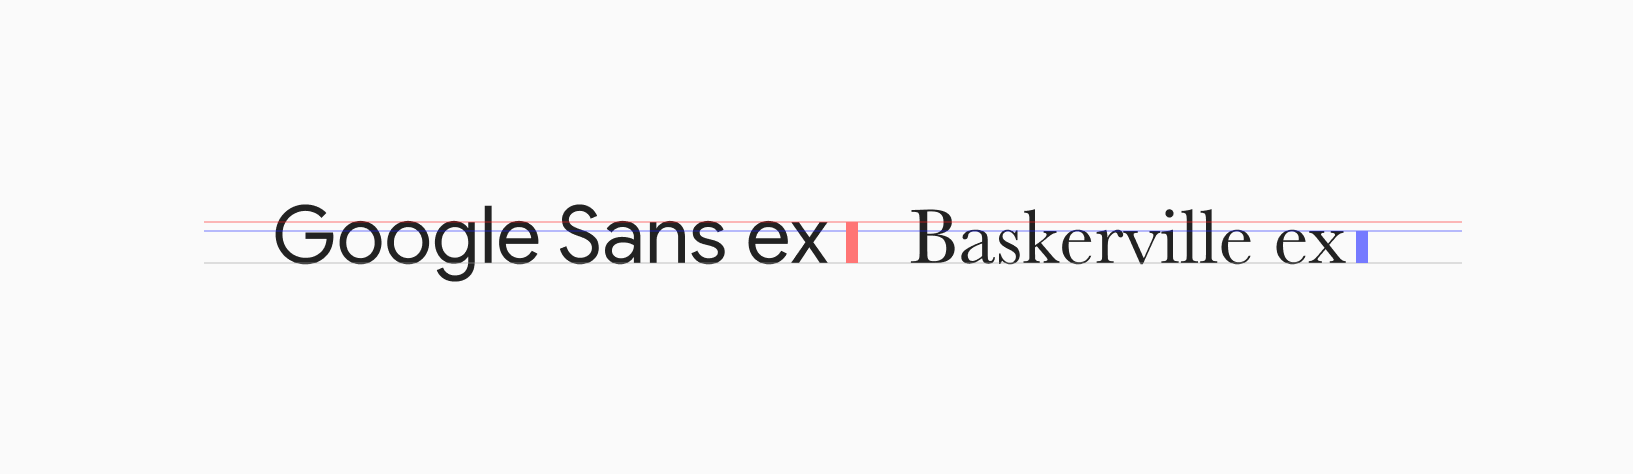 Figma 中 Google Sans 和 Baskerville 各度量辅助线对比